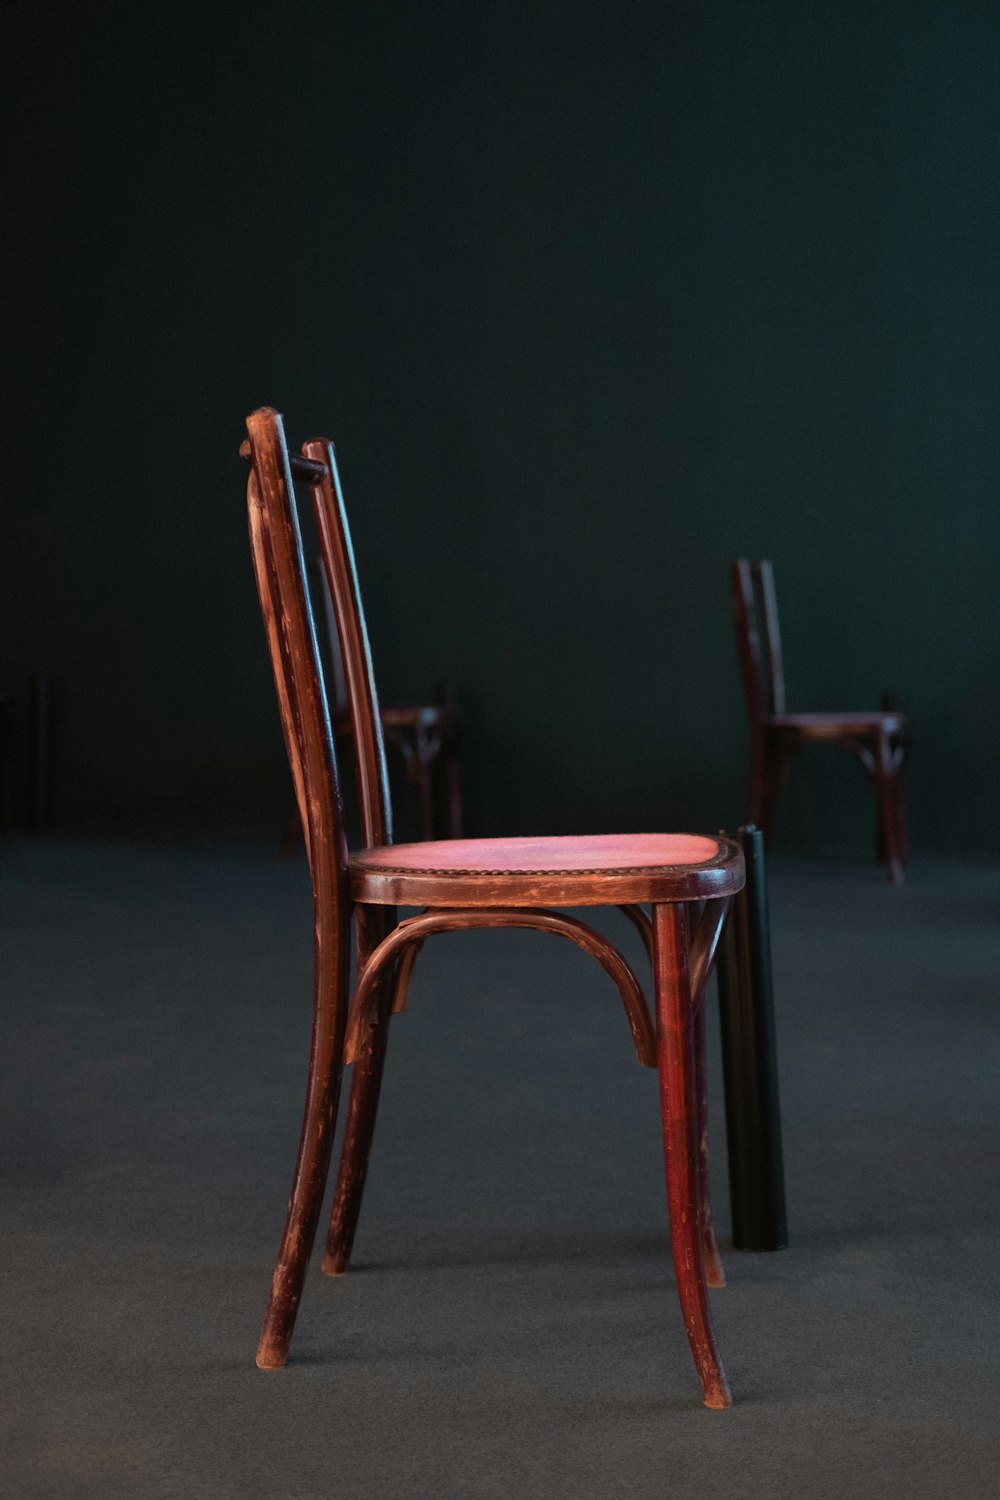 brown wooden chair on gray floor